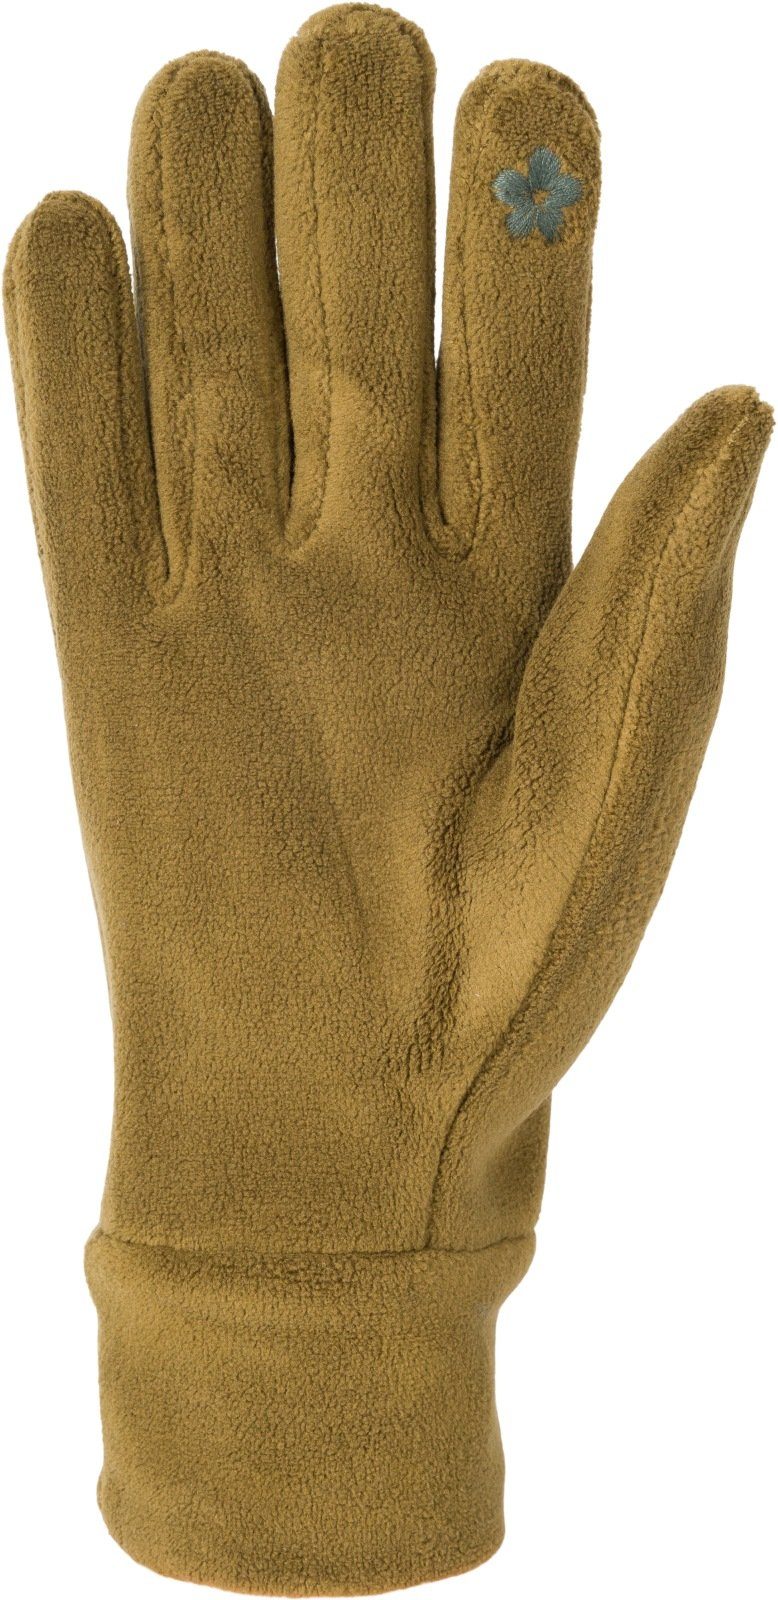 styleBREAKER Fleecehandschuhe Einfarbige Touchscreen Handschuhe Oliv Fleece